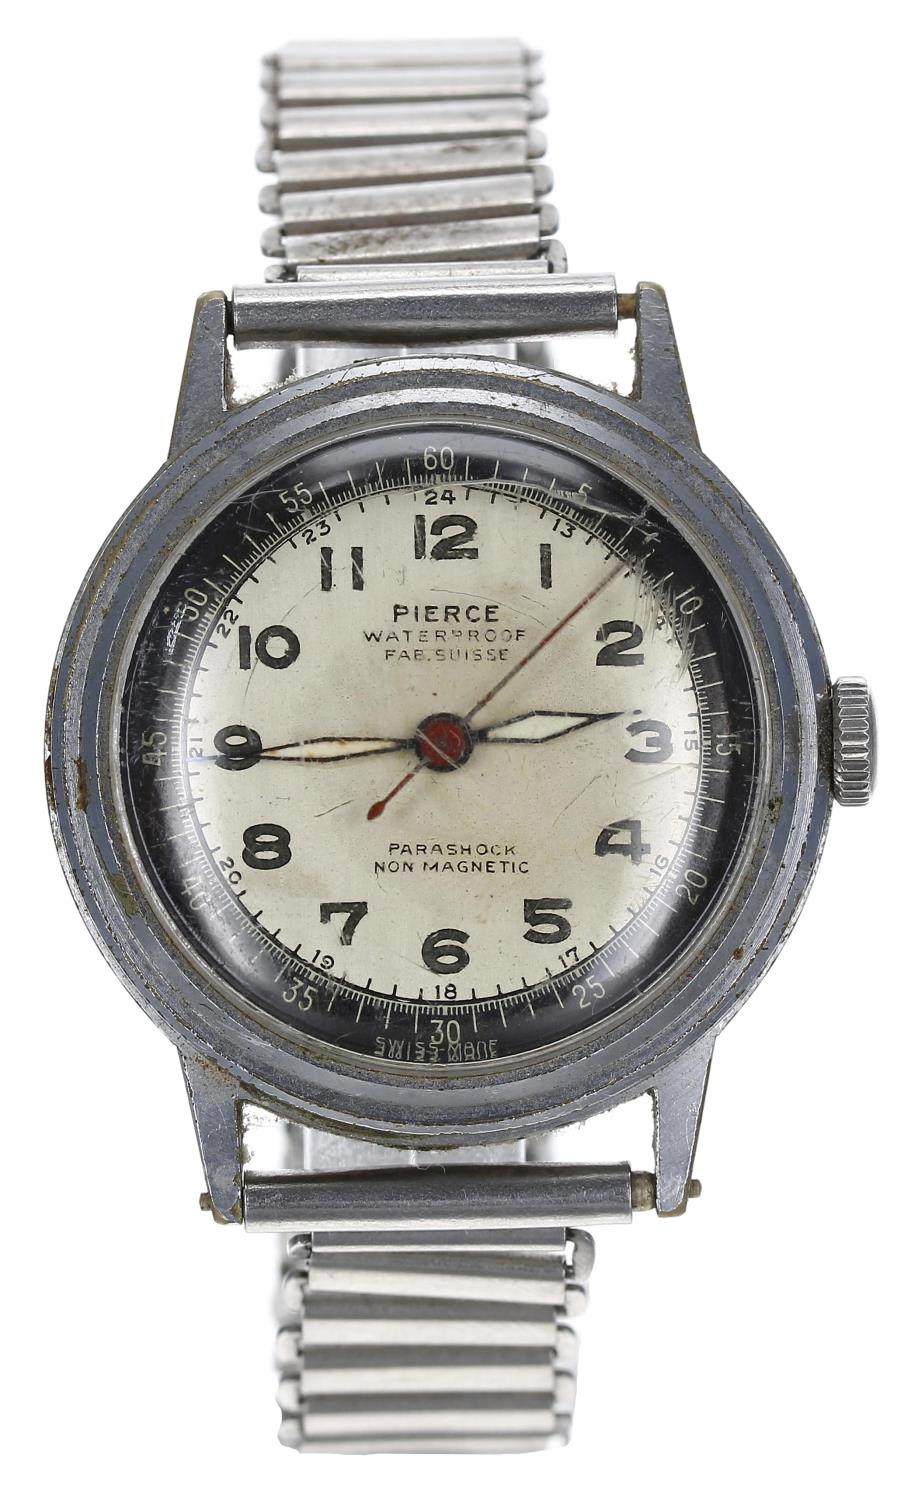 Pierce Waterproof Parashock Non Magnetic nickel and stainless steel mid-size gentleman's wristwatch,